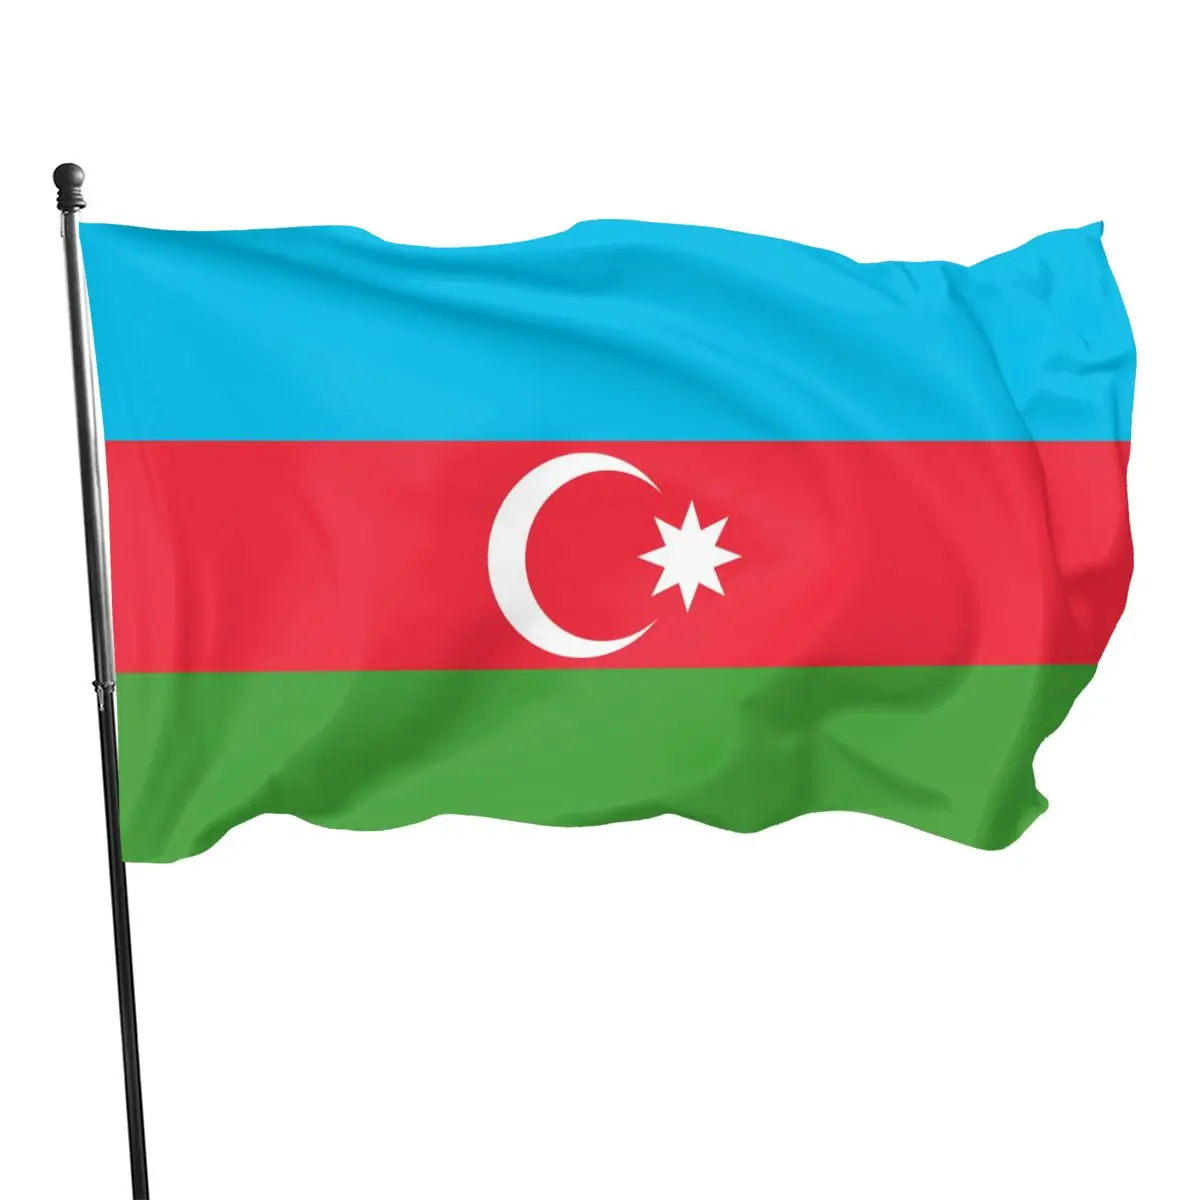 Aze The Republic Of Azerbaijan Flag Of Azerbaycan 2021 90x150cm